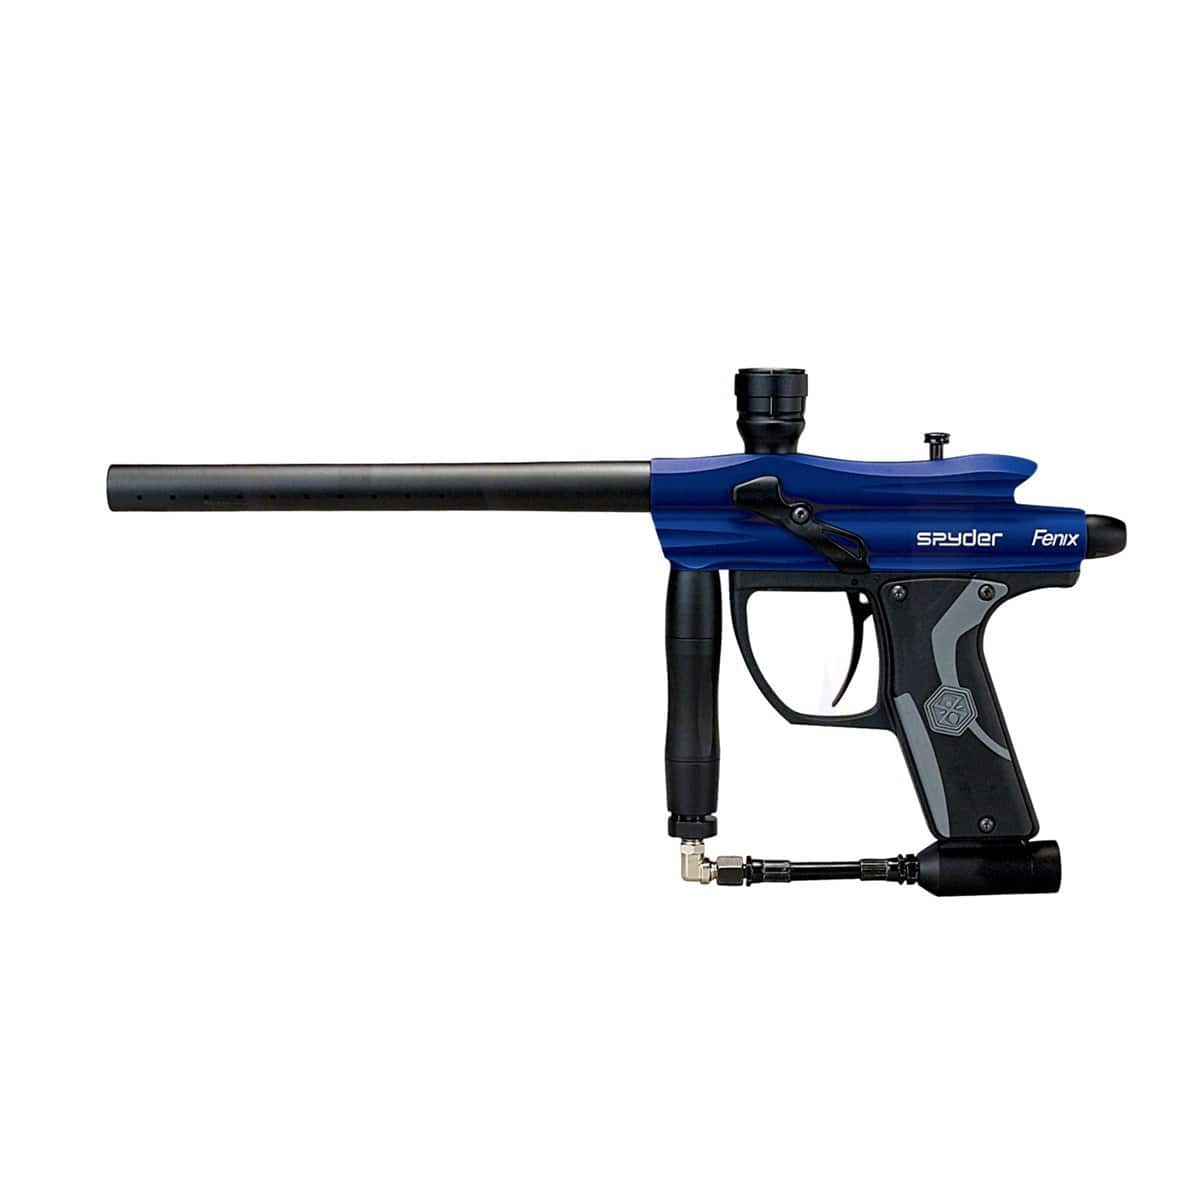 2012 KINGMAN SPYDER FENIX ELECTRONIC PAINTBALL GUN - GLOSS BLUE - Eminent Paintball And Airsoft